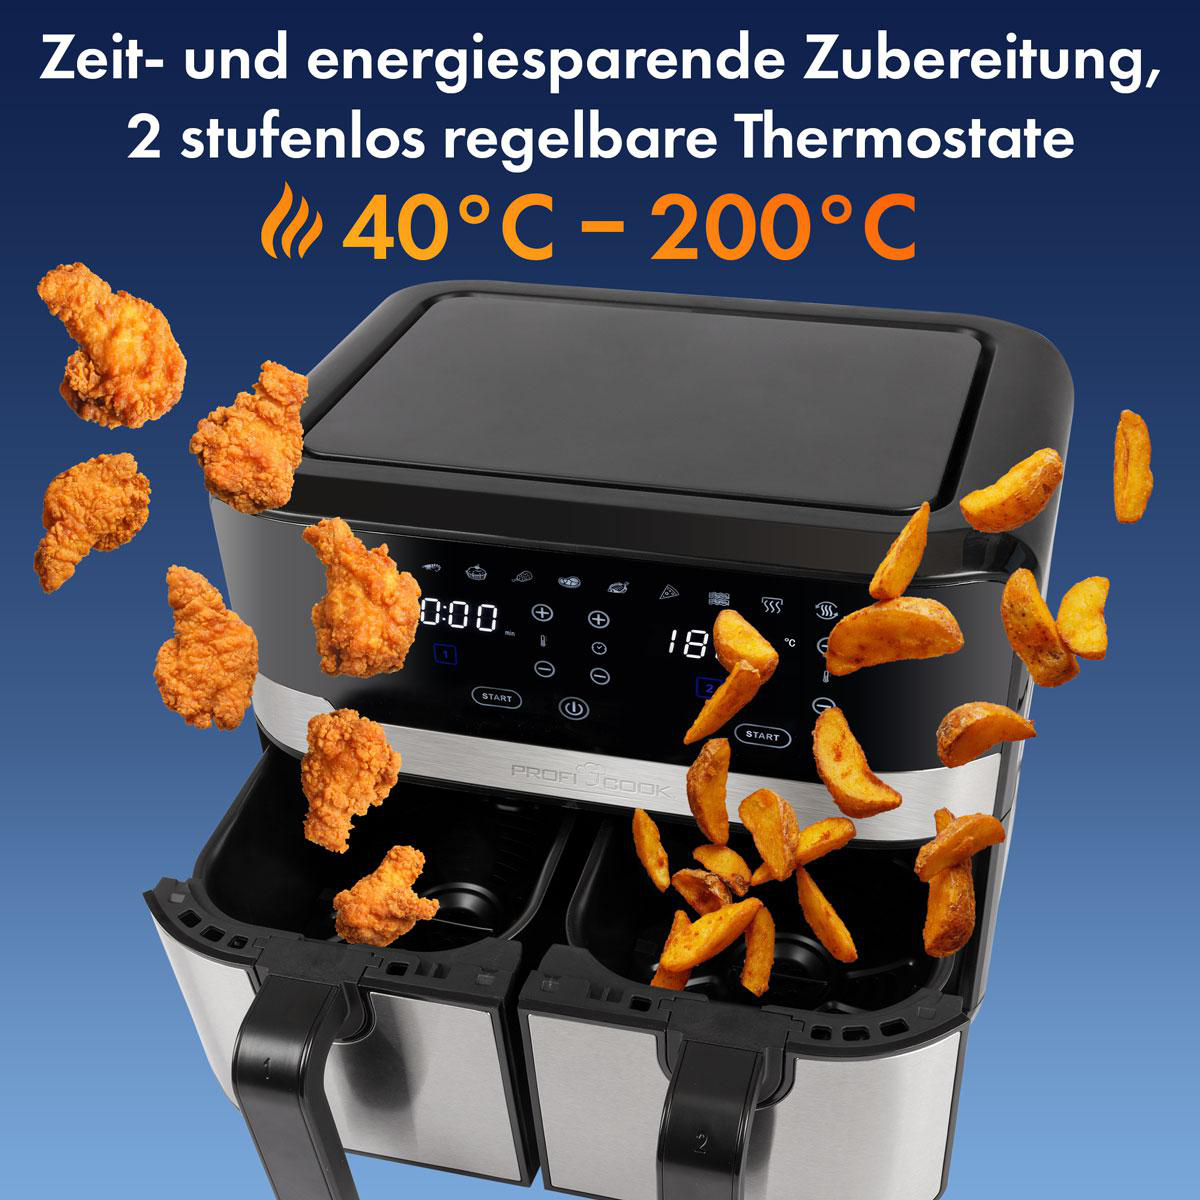 Schwarz/Edelstahl PROFICOOK 2400 Watt PC-FR Heißluftfritteuse H 1242